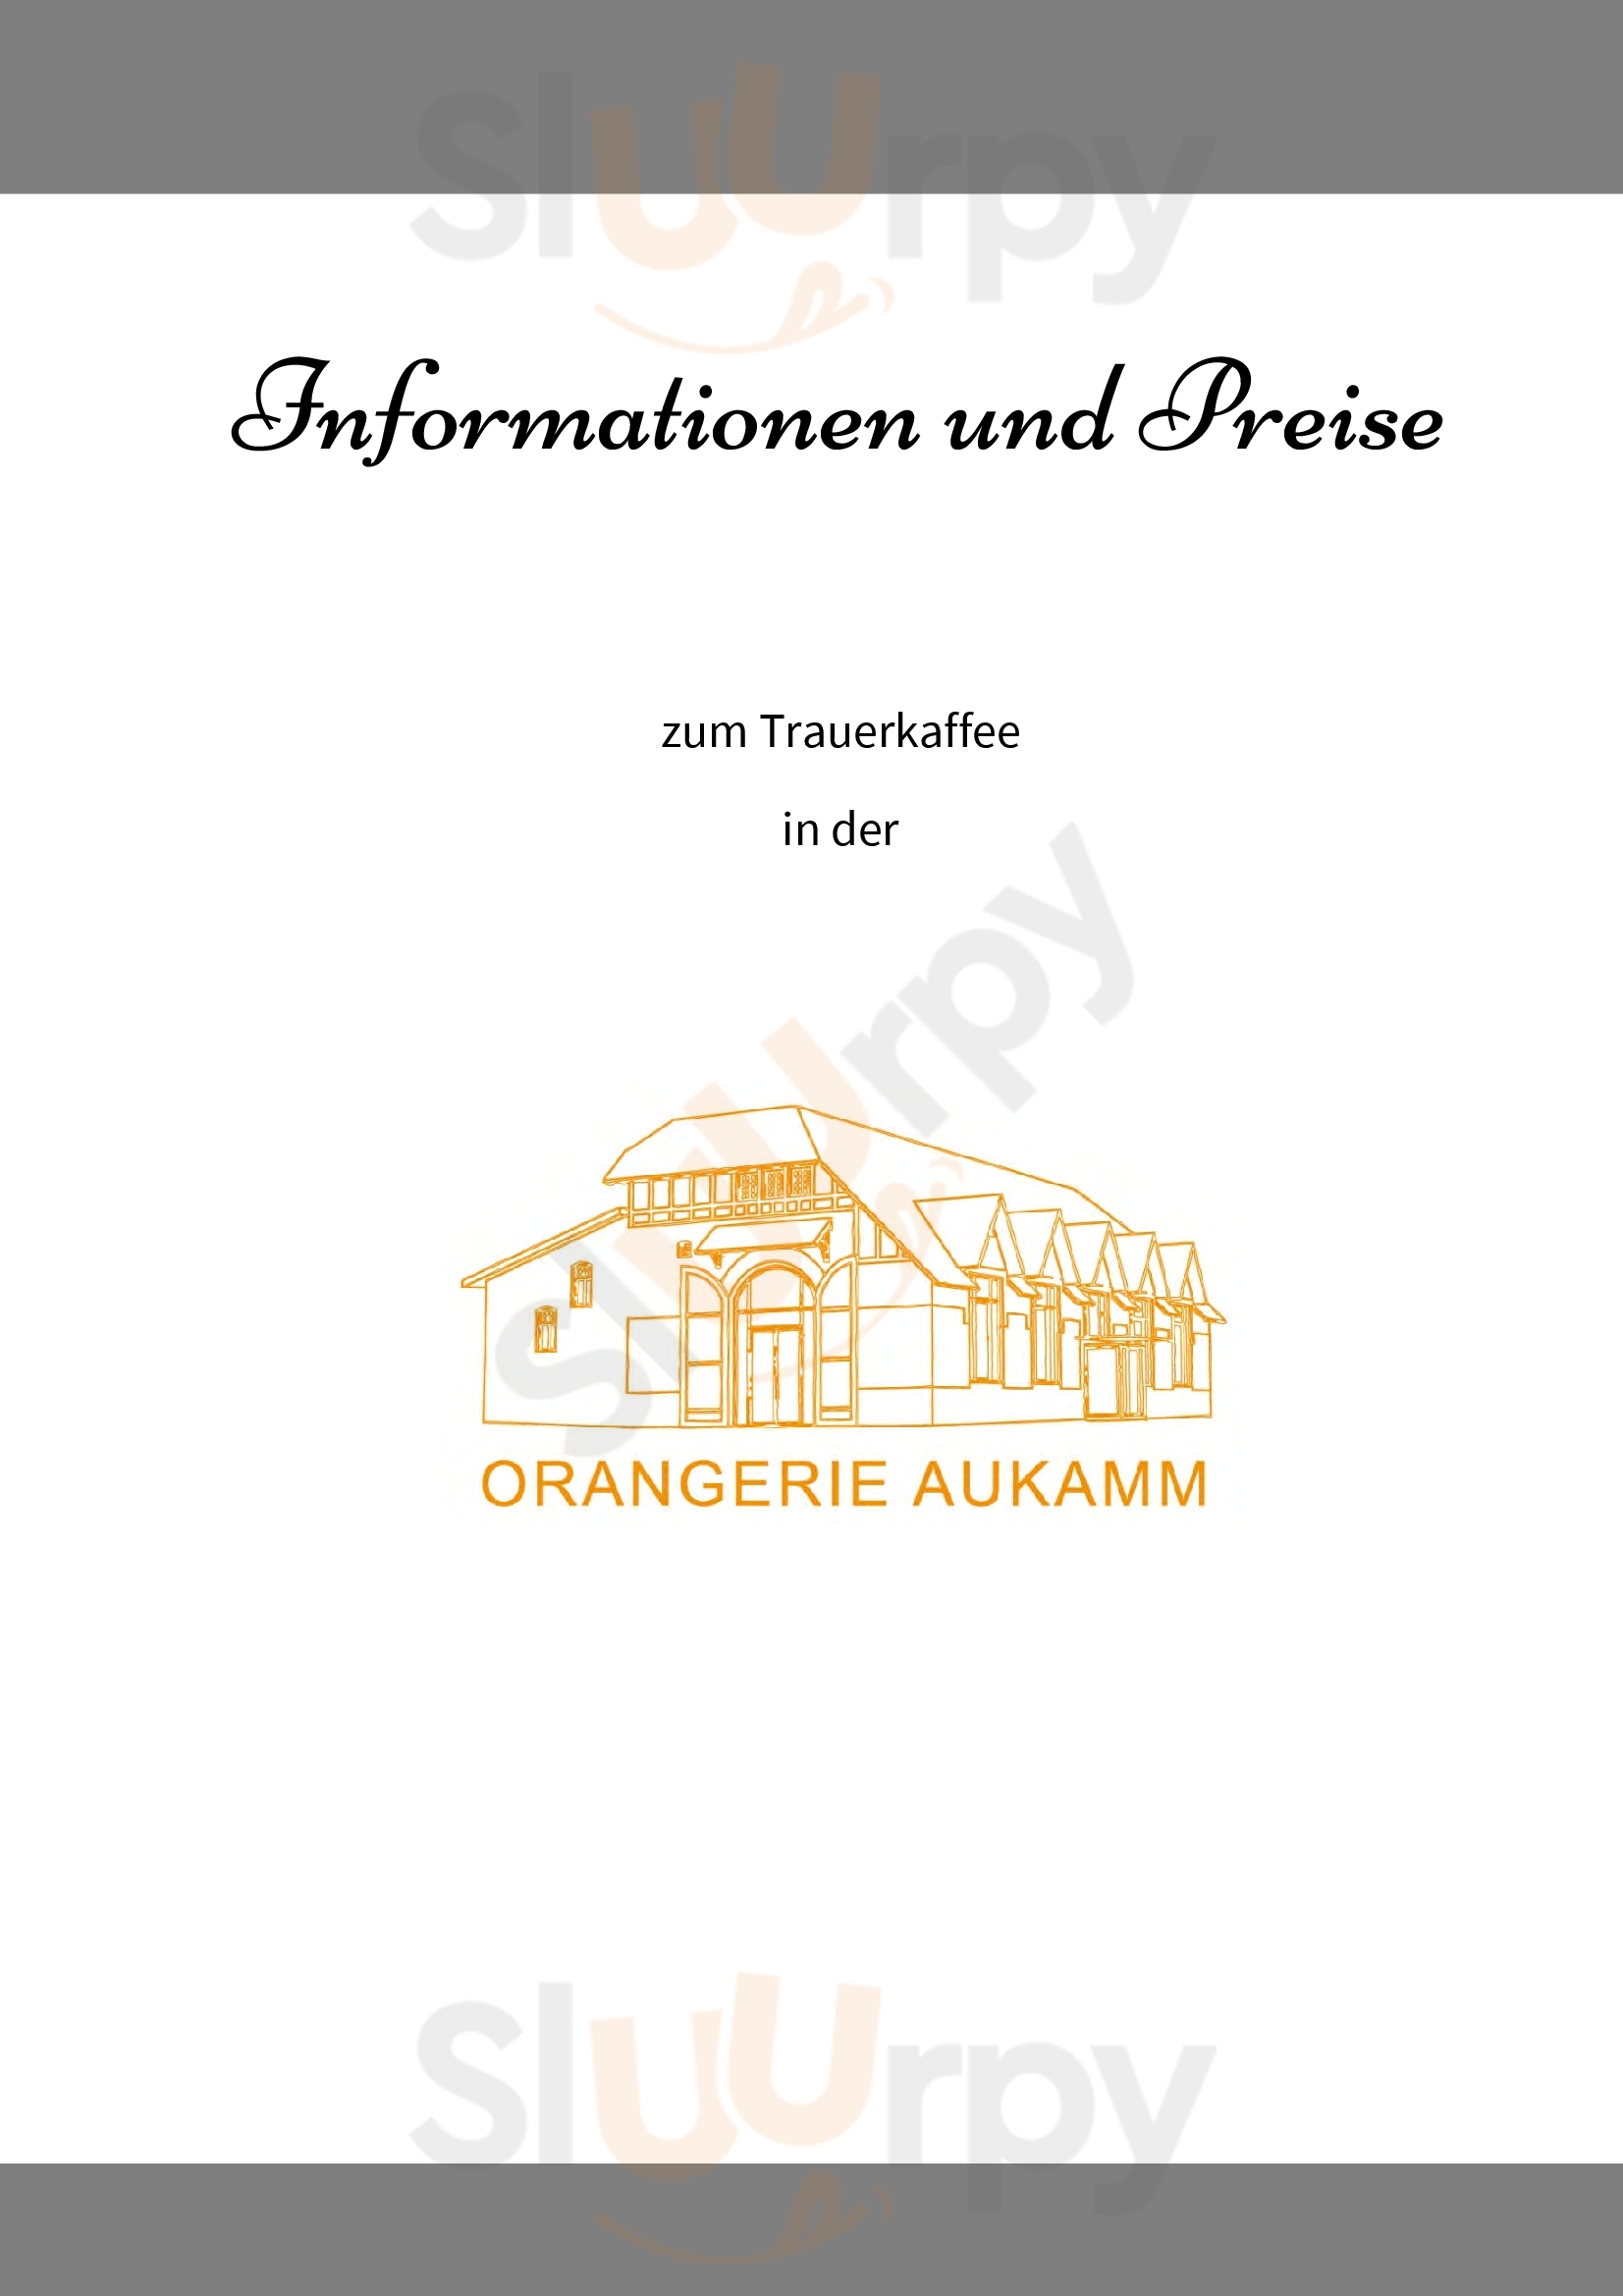 Café Orangerie Aukamm Wiesbaden Menu - 1